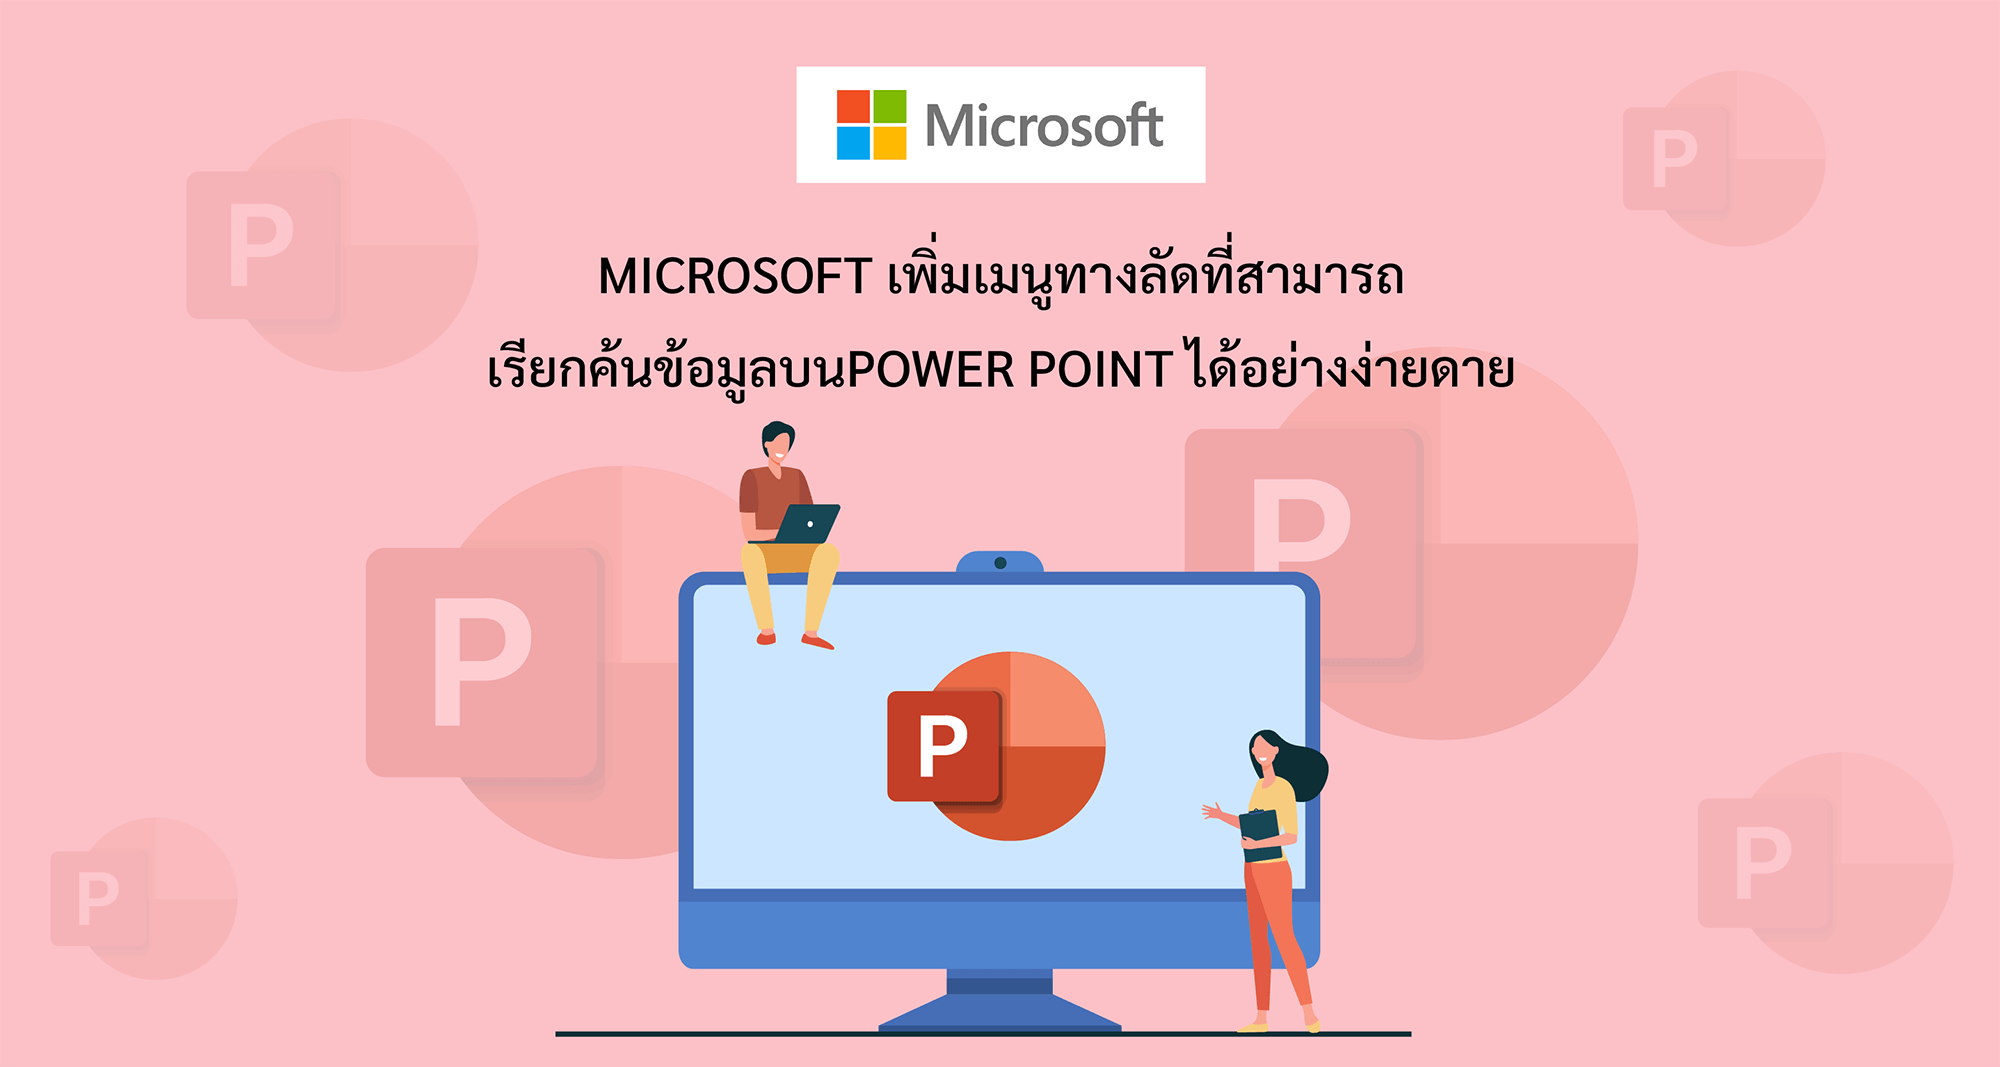 Microsoft เพิ่มเมนูทางลัดที่สามารถเรียกค้นข้อมูลบน Power Point ได้อย่างง่ายดาย